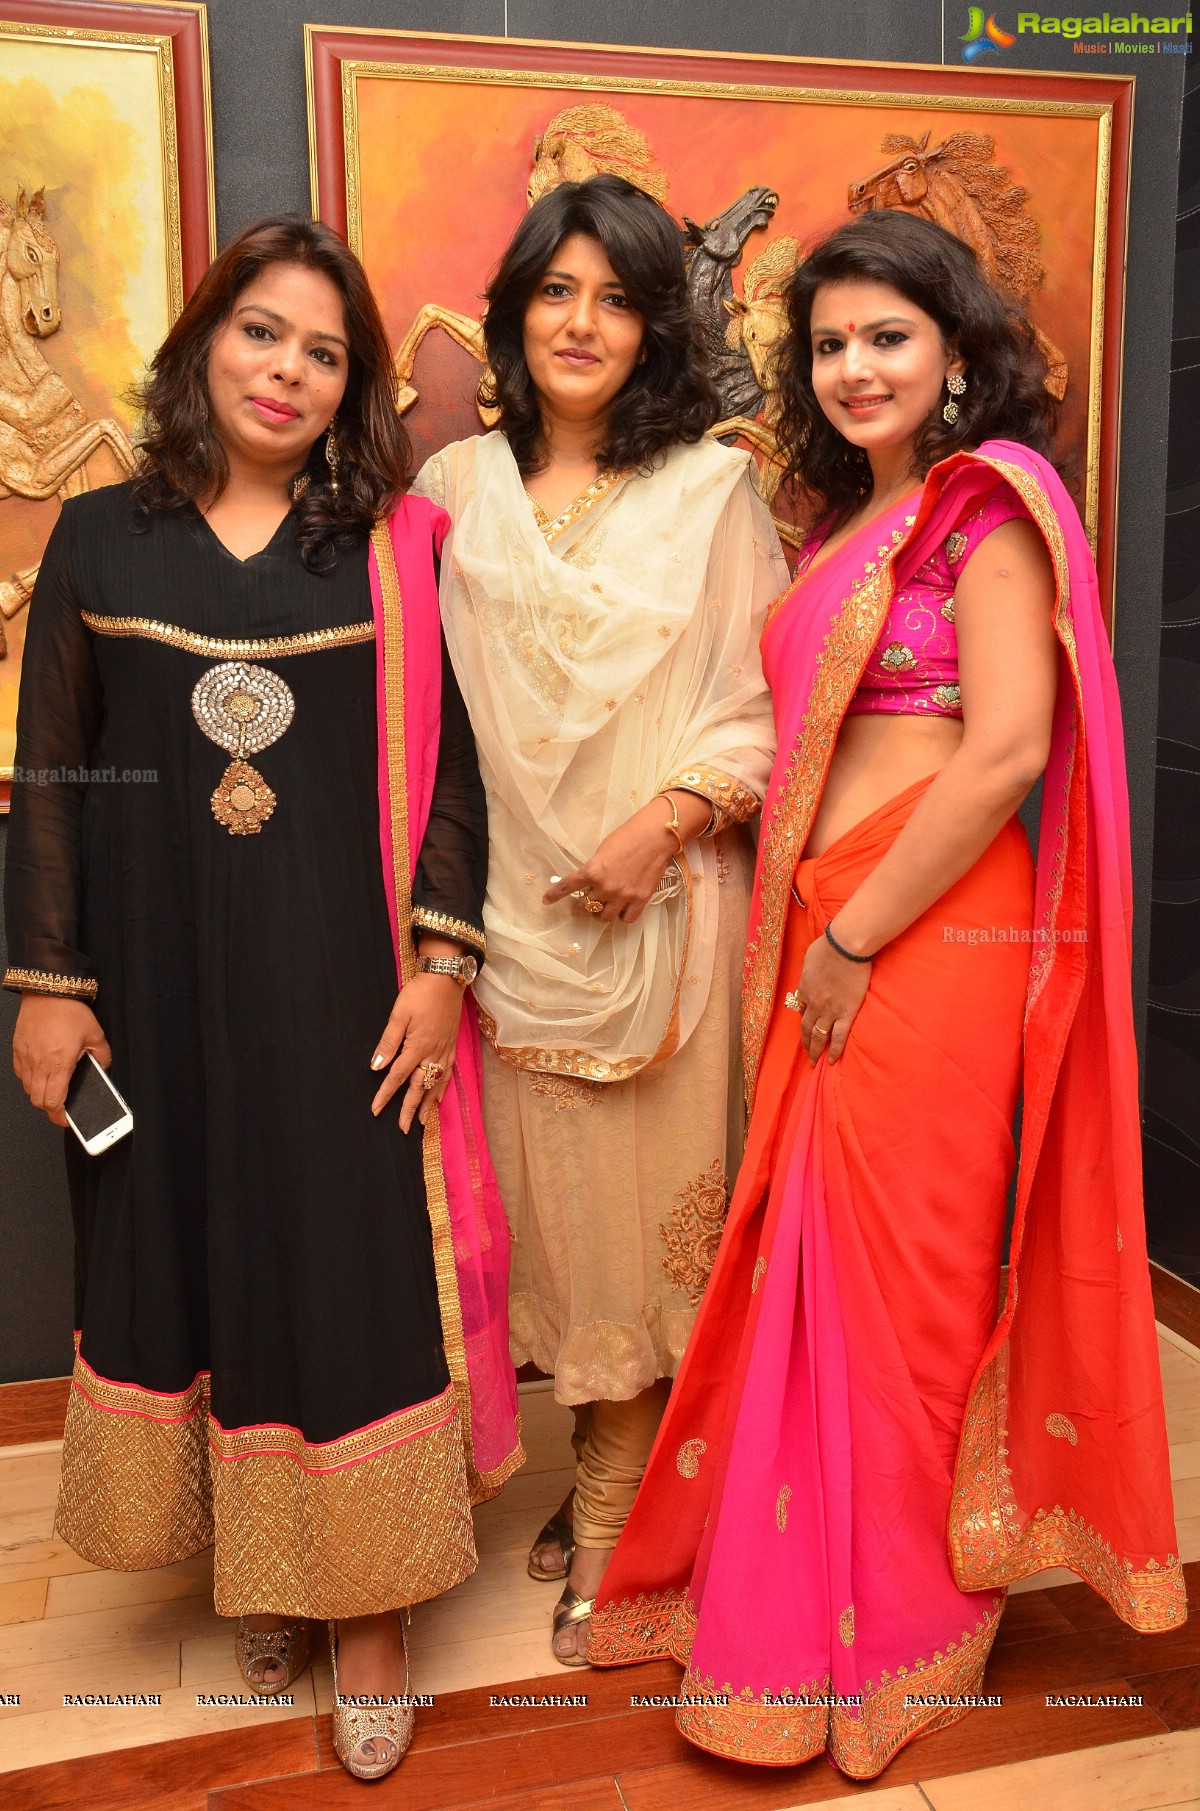 Diamond Jewellery Exhibition by Shalini Modani and Deepika Sharda at Izz Gallerie Space, Hyderabad